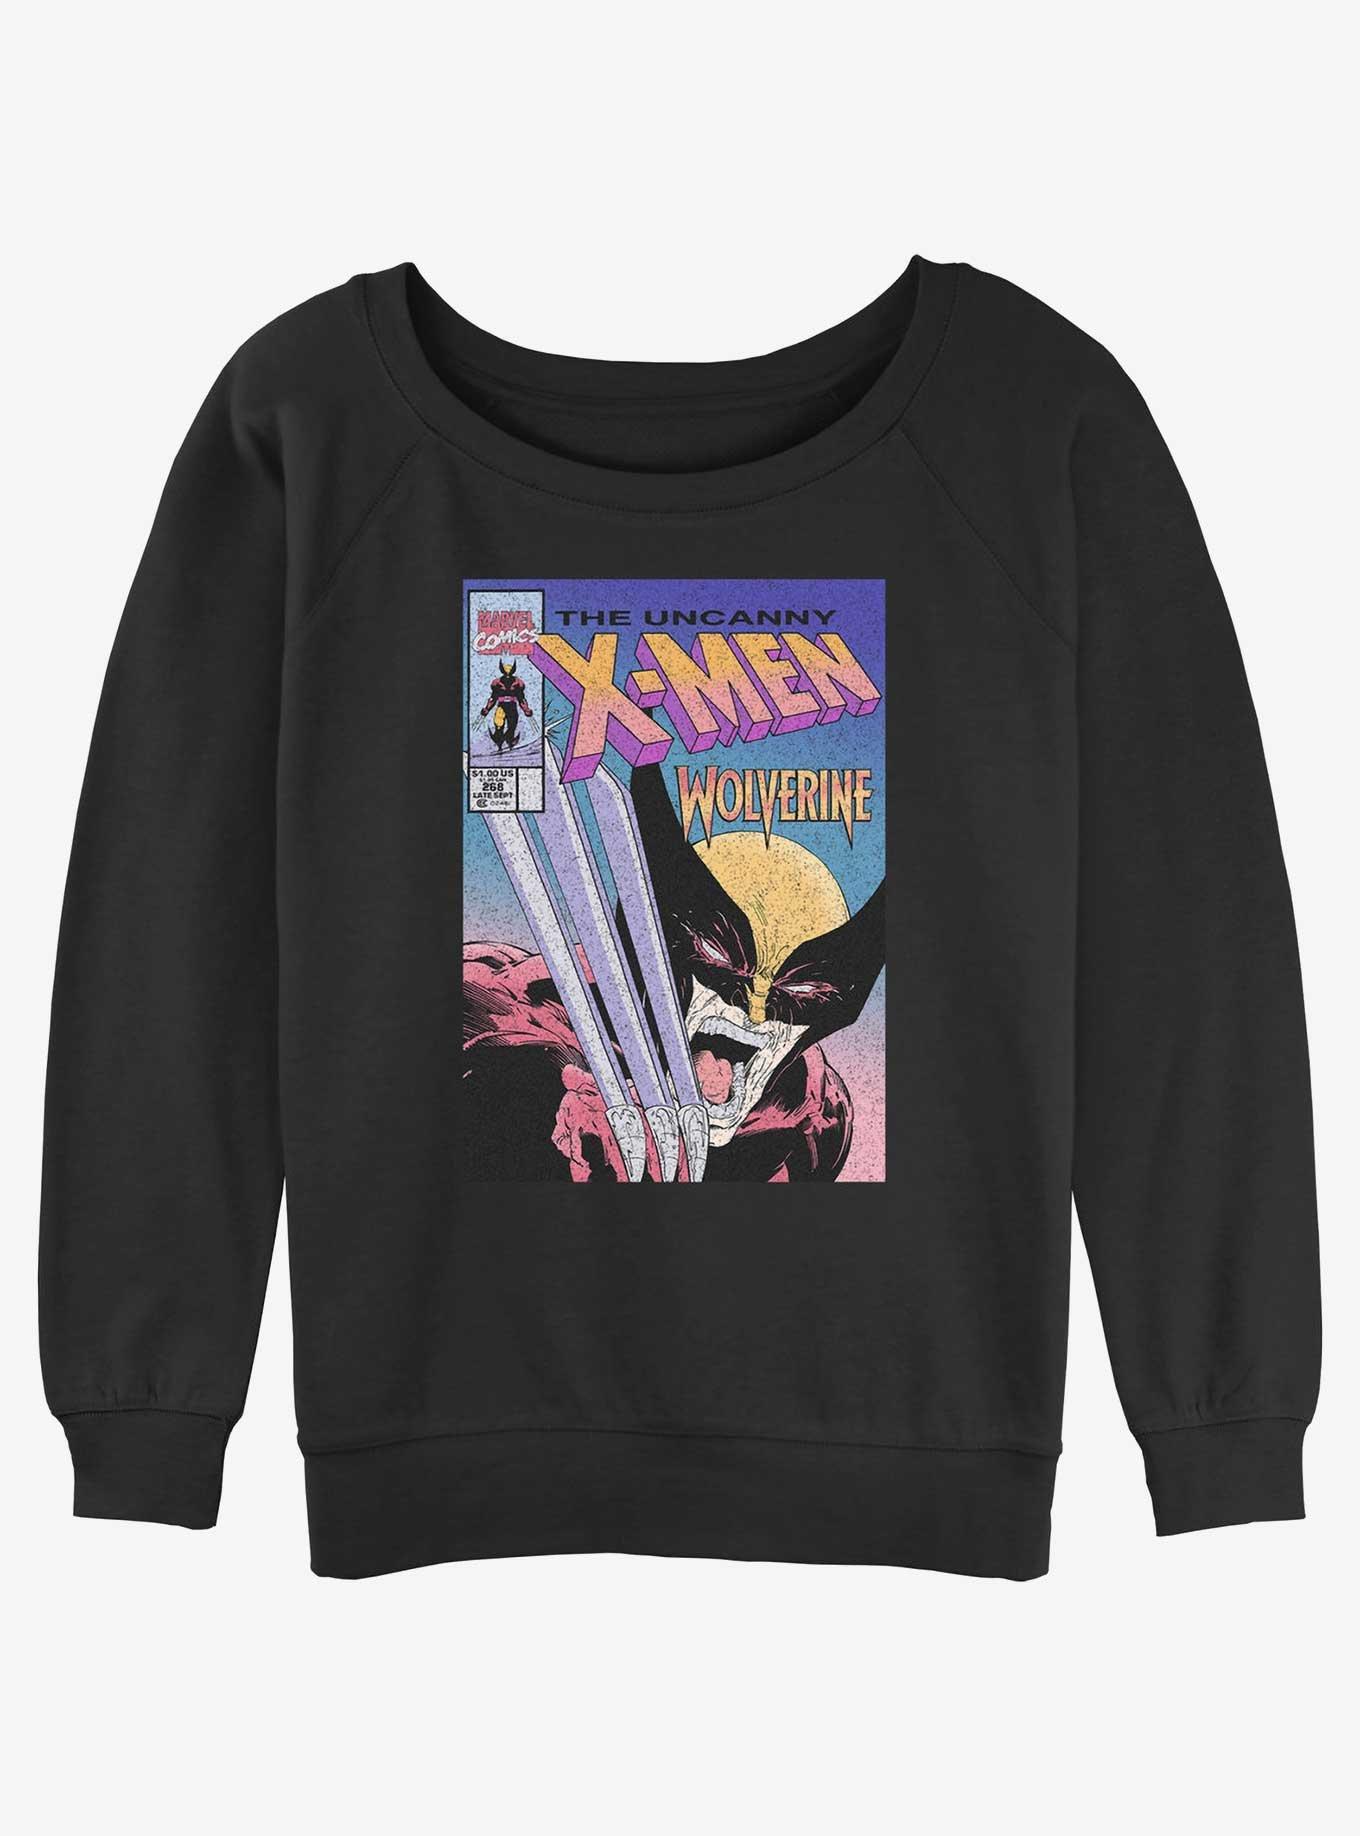 Wolverine The Uncanny X-Men Comic Cover Womens Slouchy Sweatshirt, BLACK, hi-res